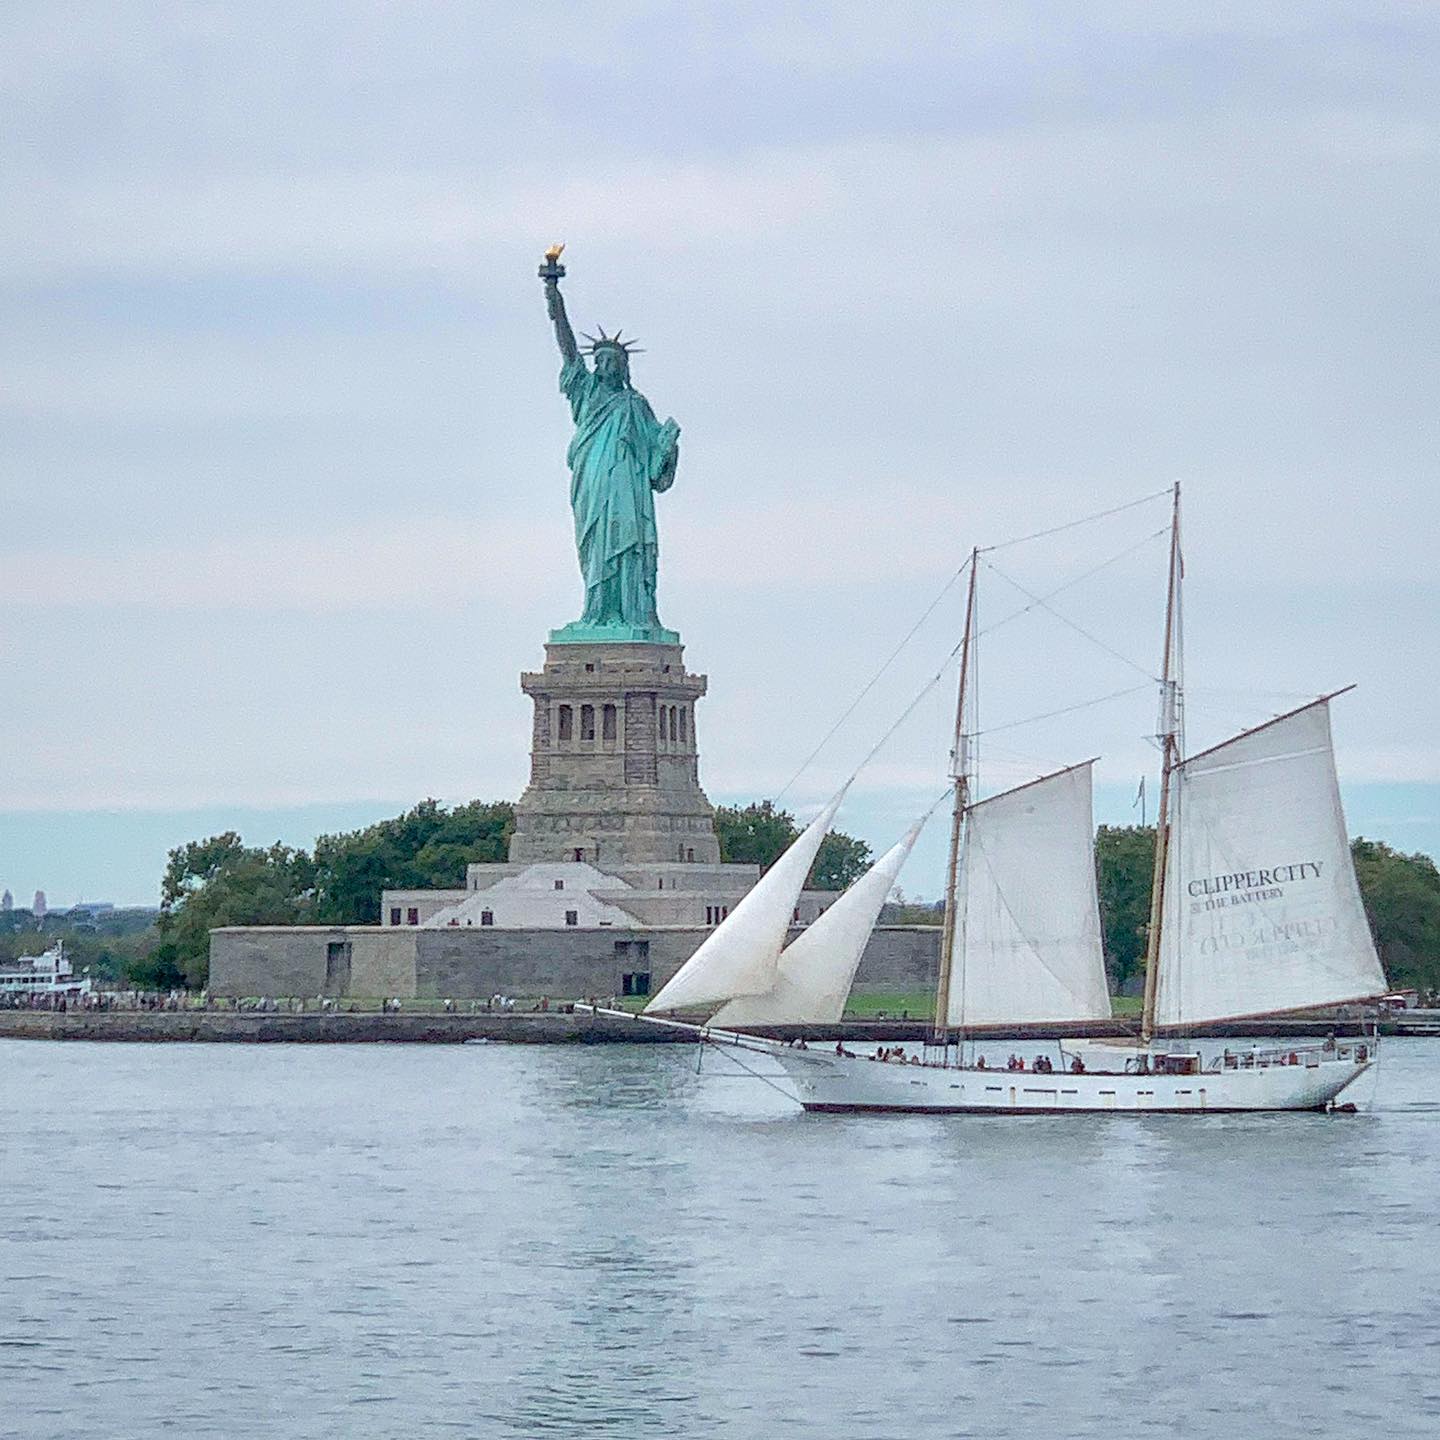 Statue of Liberty 🗽
.
#newyork #statue #statueofliberty #ladyliberty #liberty #usa #ny #travel #traveller #traveler #traveling #travelling #travelblogger #travelblog #manhattan #bestofnewyork #newyorkcity #nyc #bluesky #sunnyday #wonderful_places #wonderful #city #beautifulplaces #sailingboat